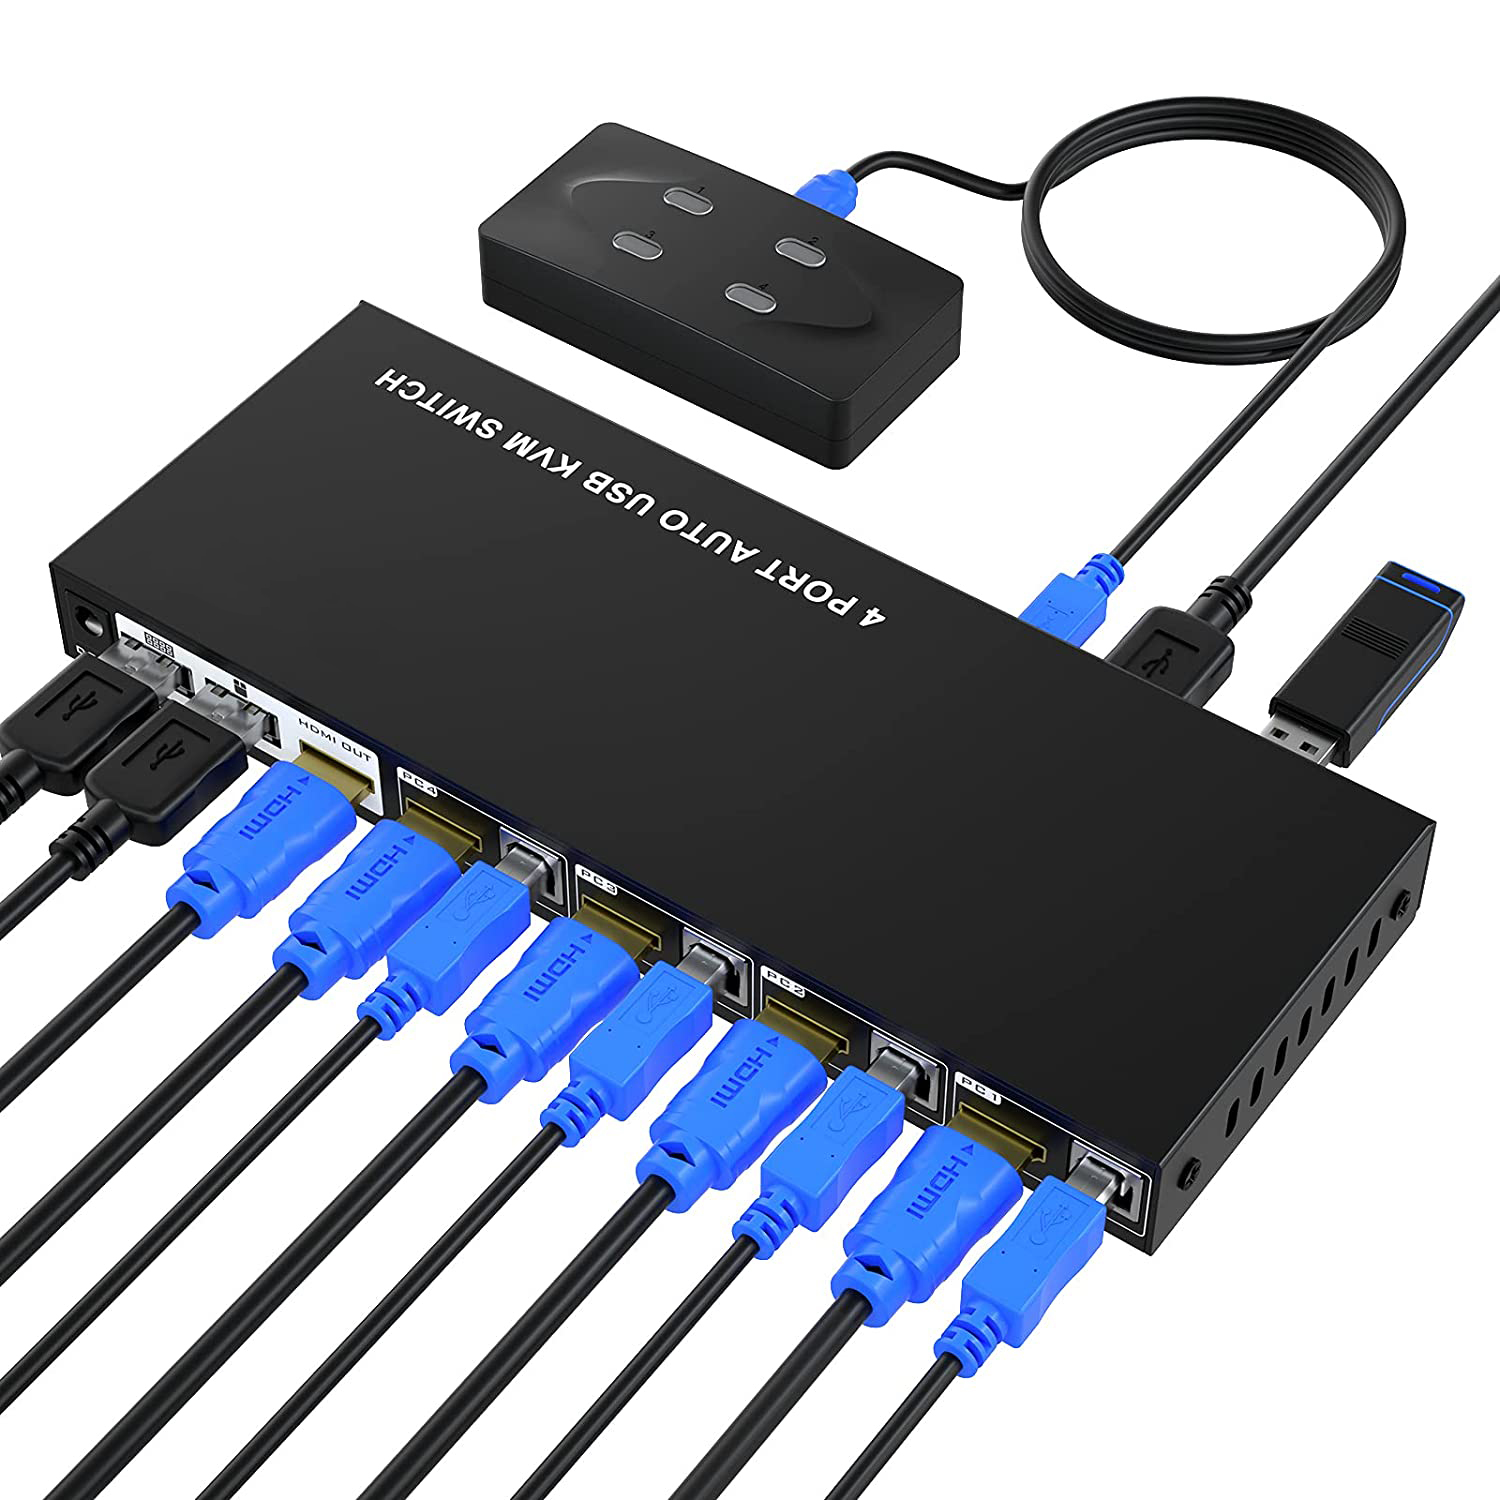 HF-KS20V-401: HDMI 2.0 4K@60Hz 4 Port KVM Switch with 2-port USB 2.0 Hub, 4 Computers Share 1 Monitor Keyboard Mouse Printer or U-Disk